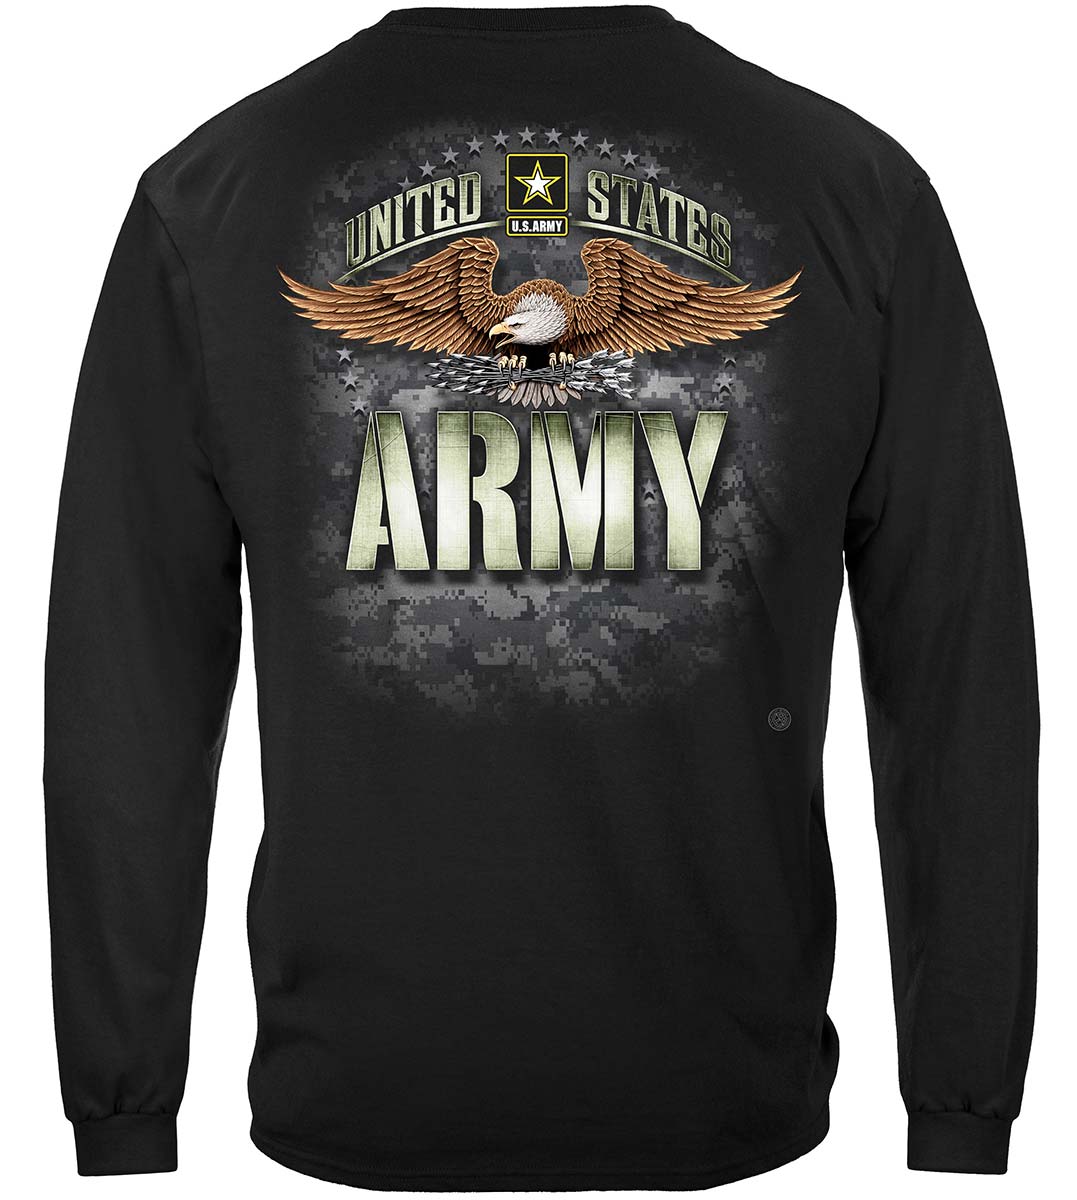 Army Large Eagle Premium T-Shirt